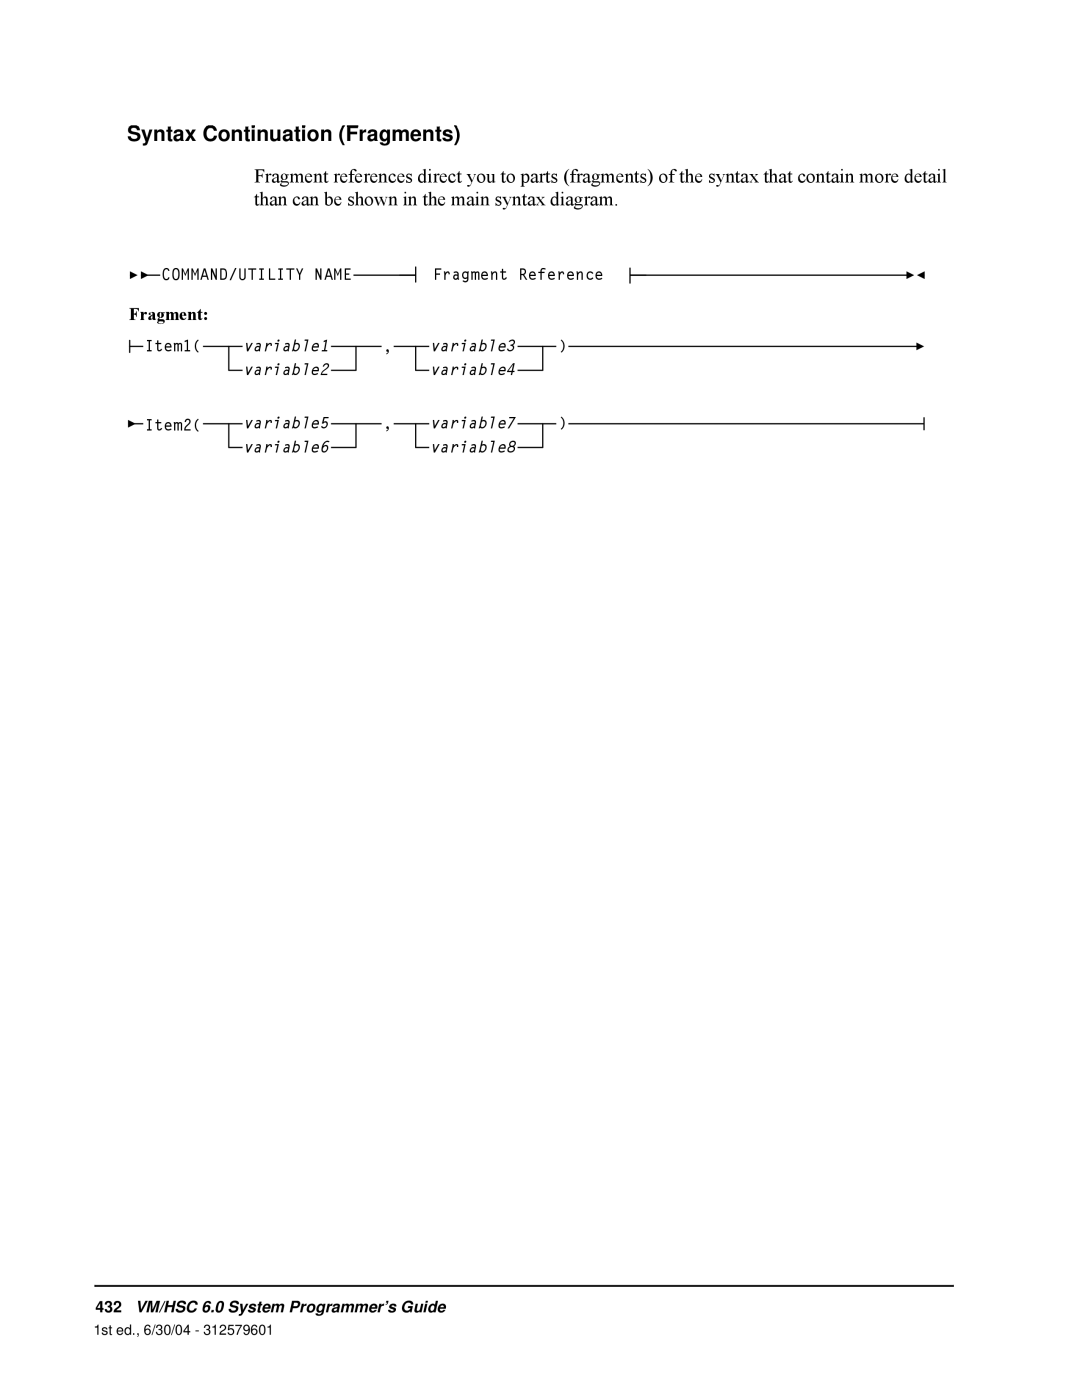 StorageTek manual Syntax Continuation Fragments, 432VM/HSC 6.0 System Programmer’s Guide, 1st ed., 6/30/04 